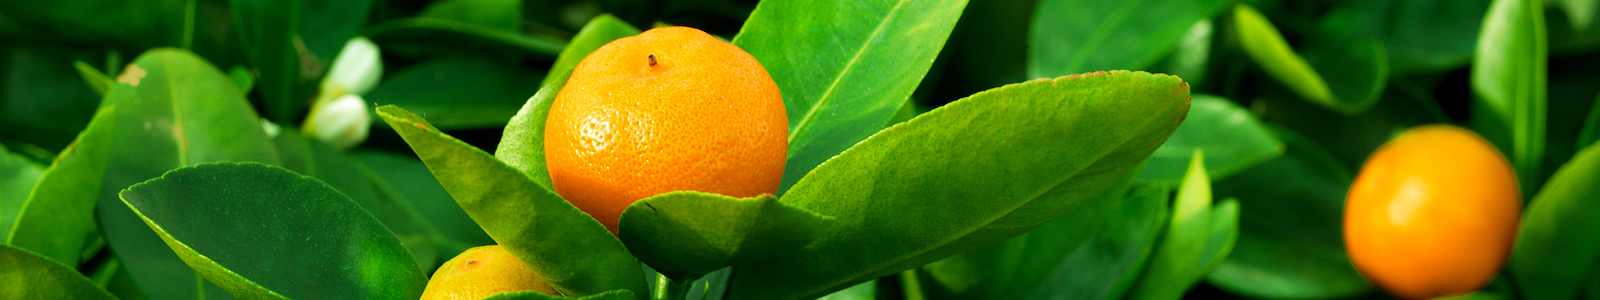 citrus feed winter